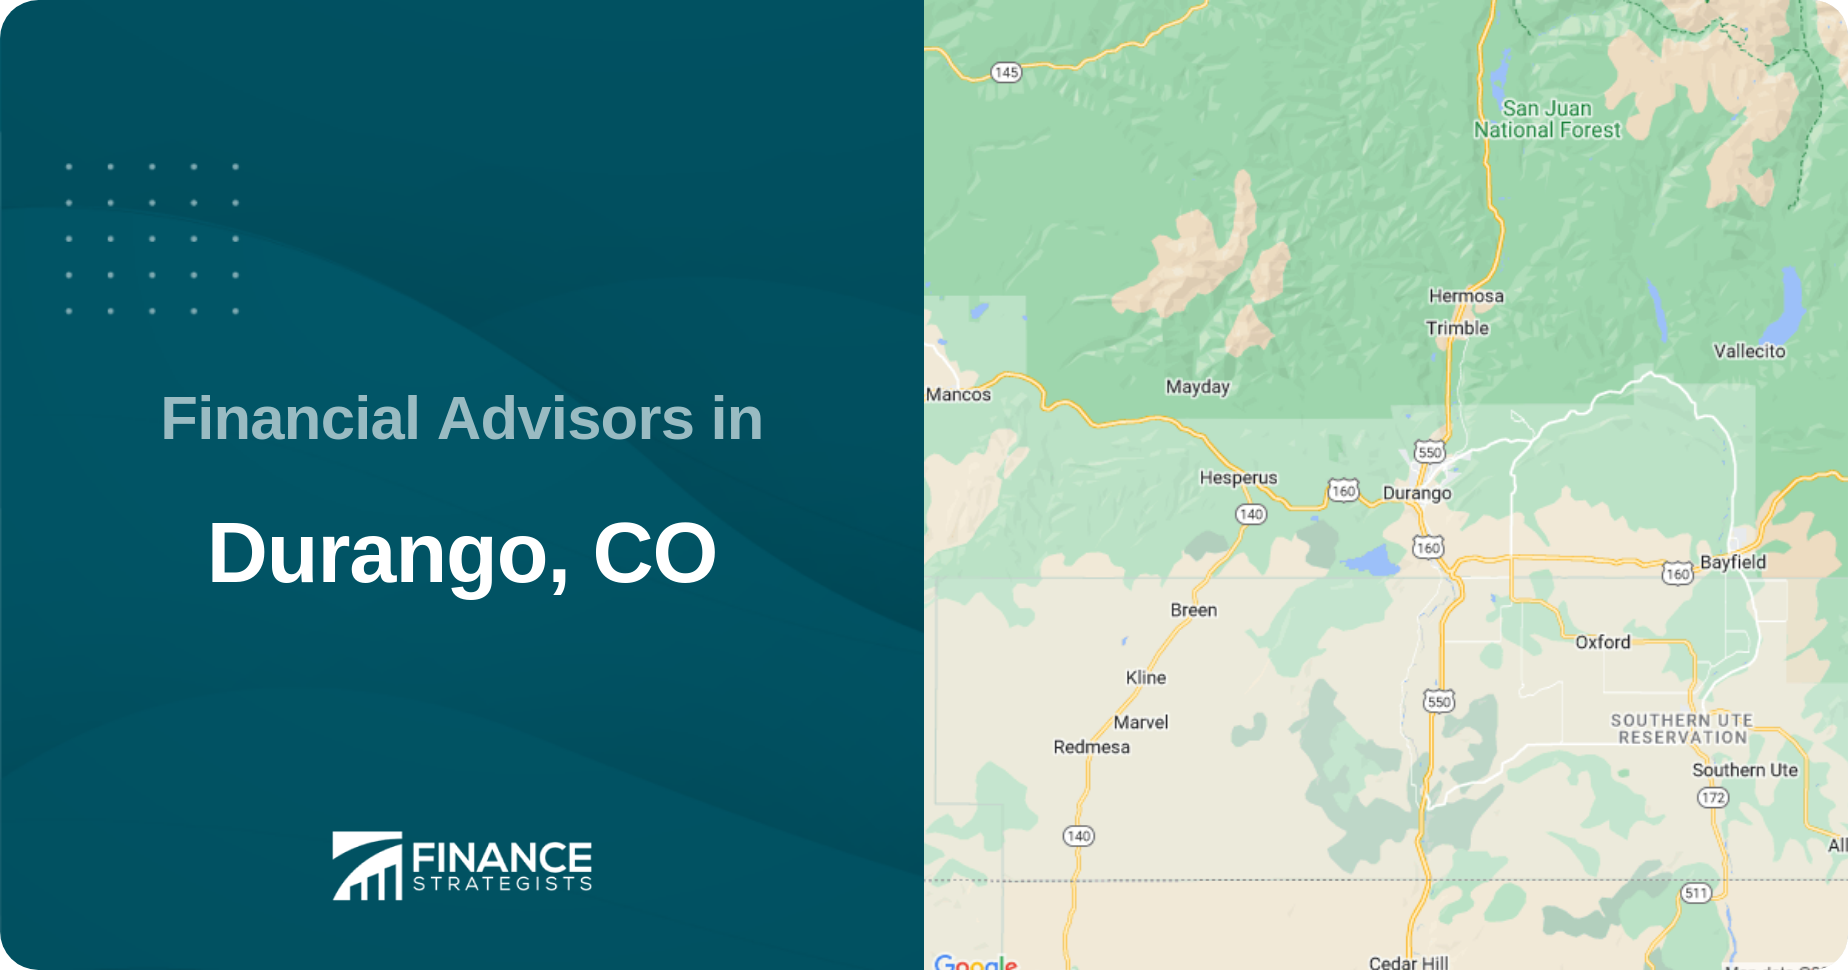 Financial Advisors in Durango, CO